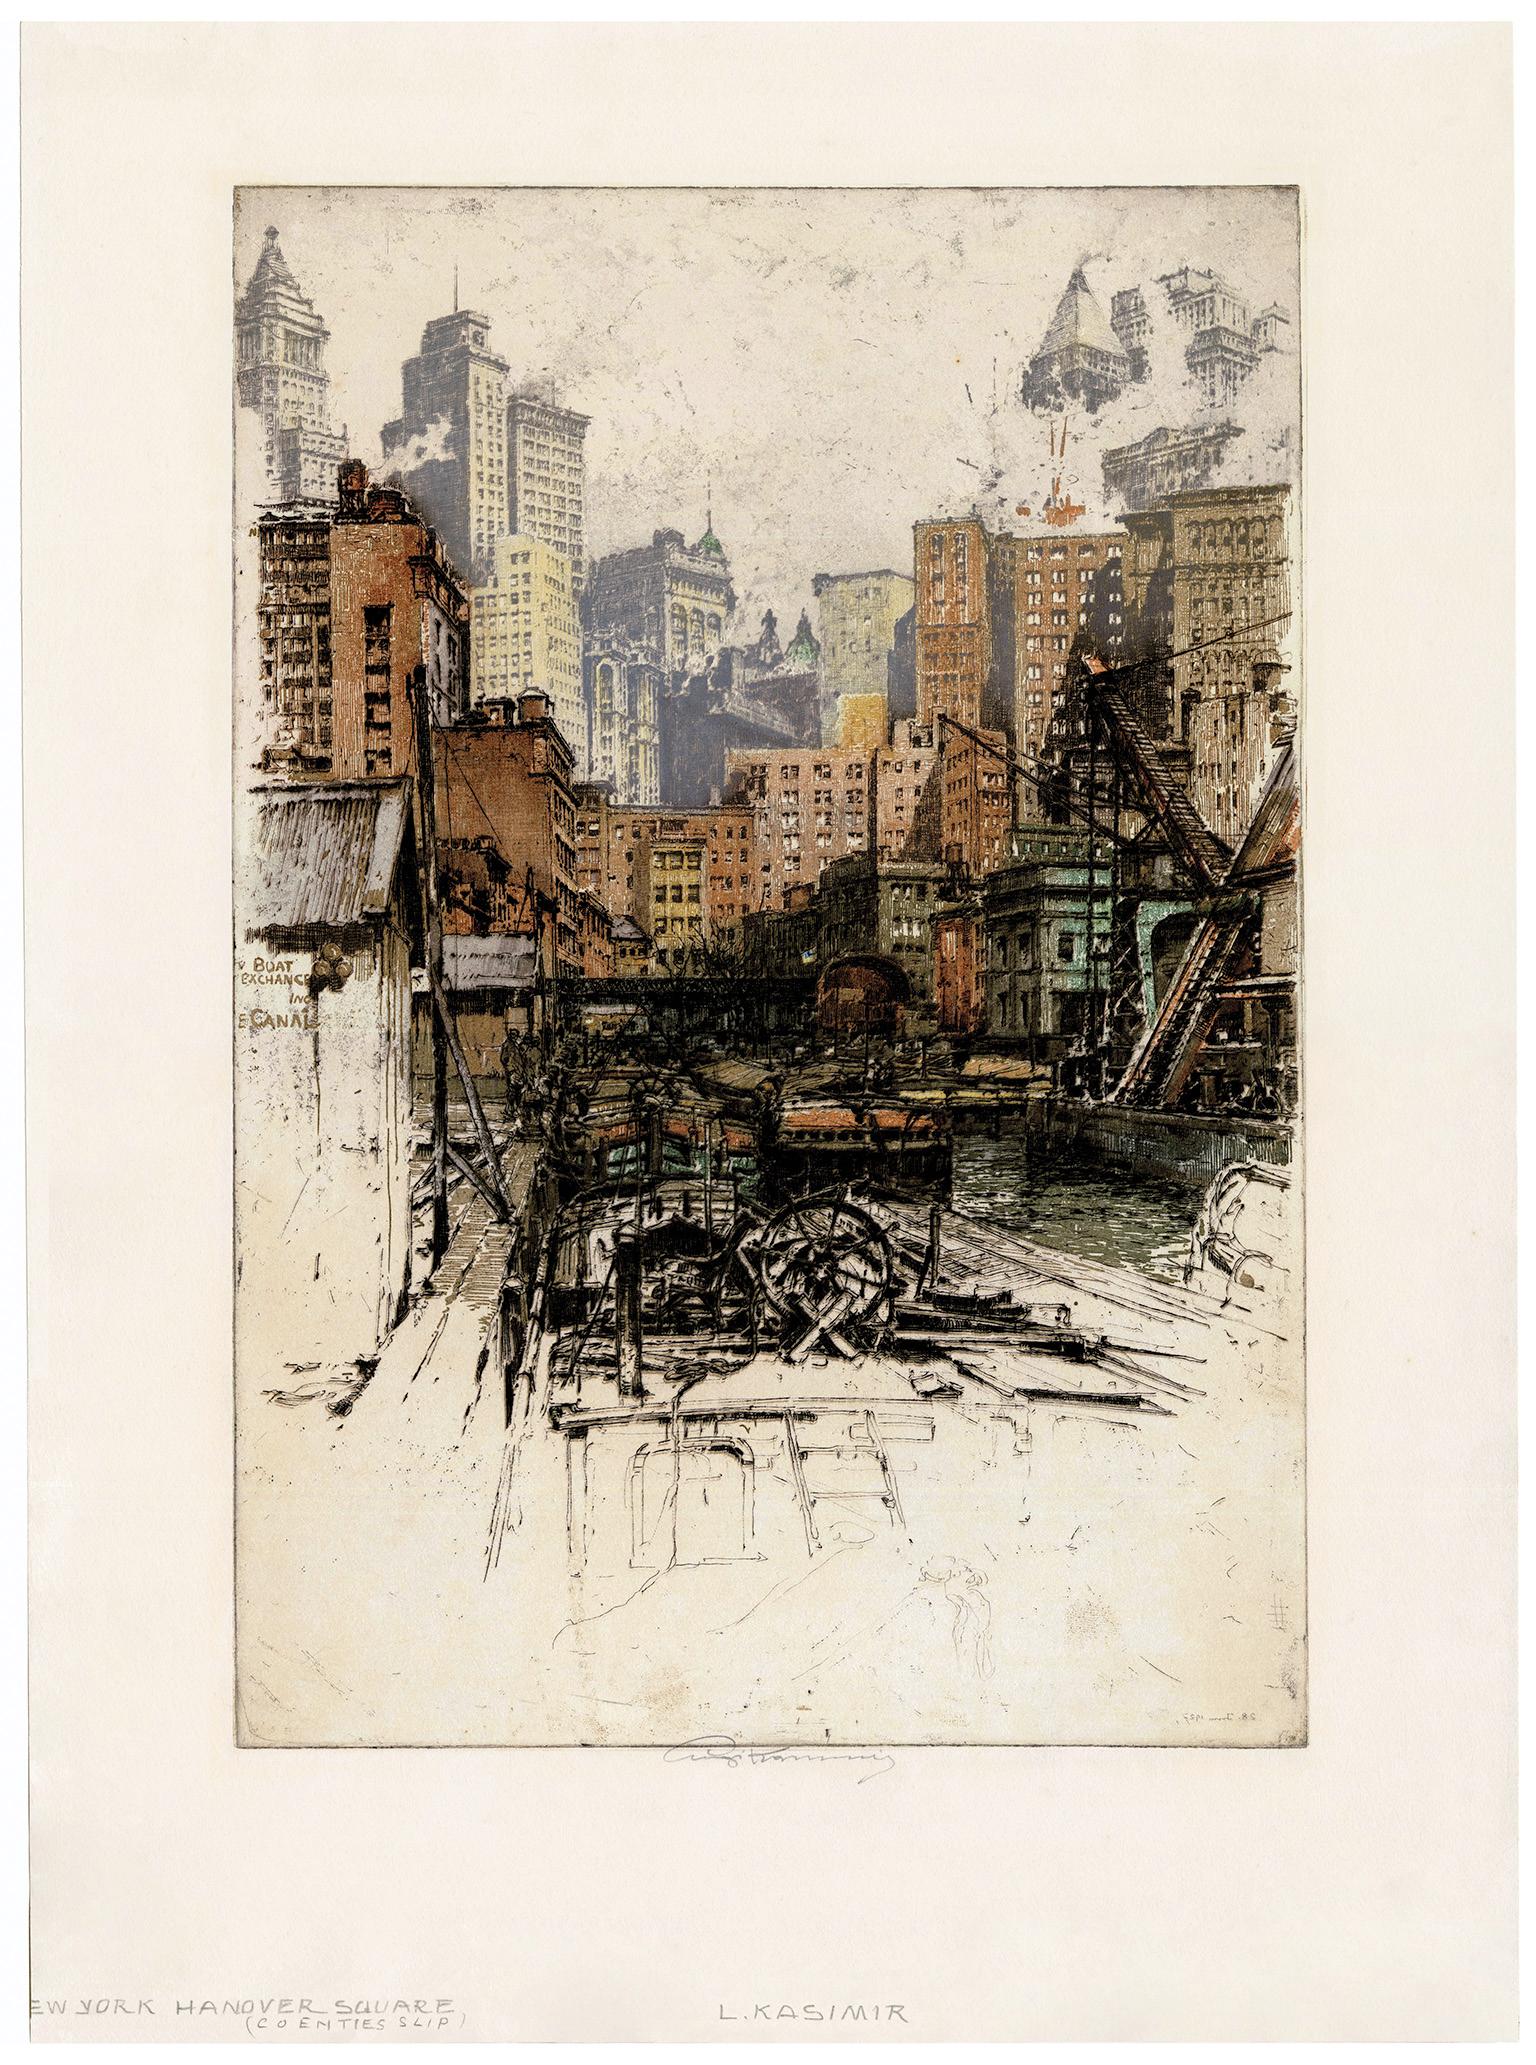 'Coenties Slip' — 1920s Lower Manhattan, Financial District - Print by Luigi Kasimir